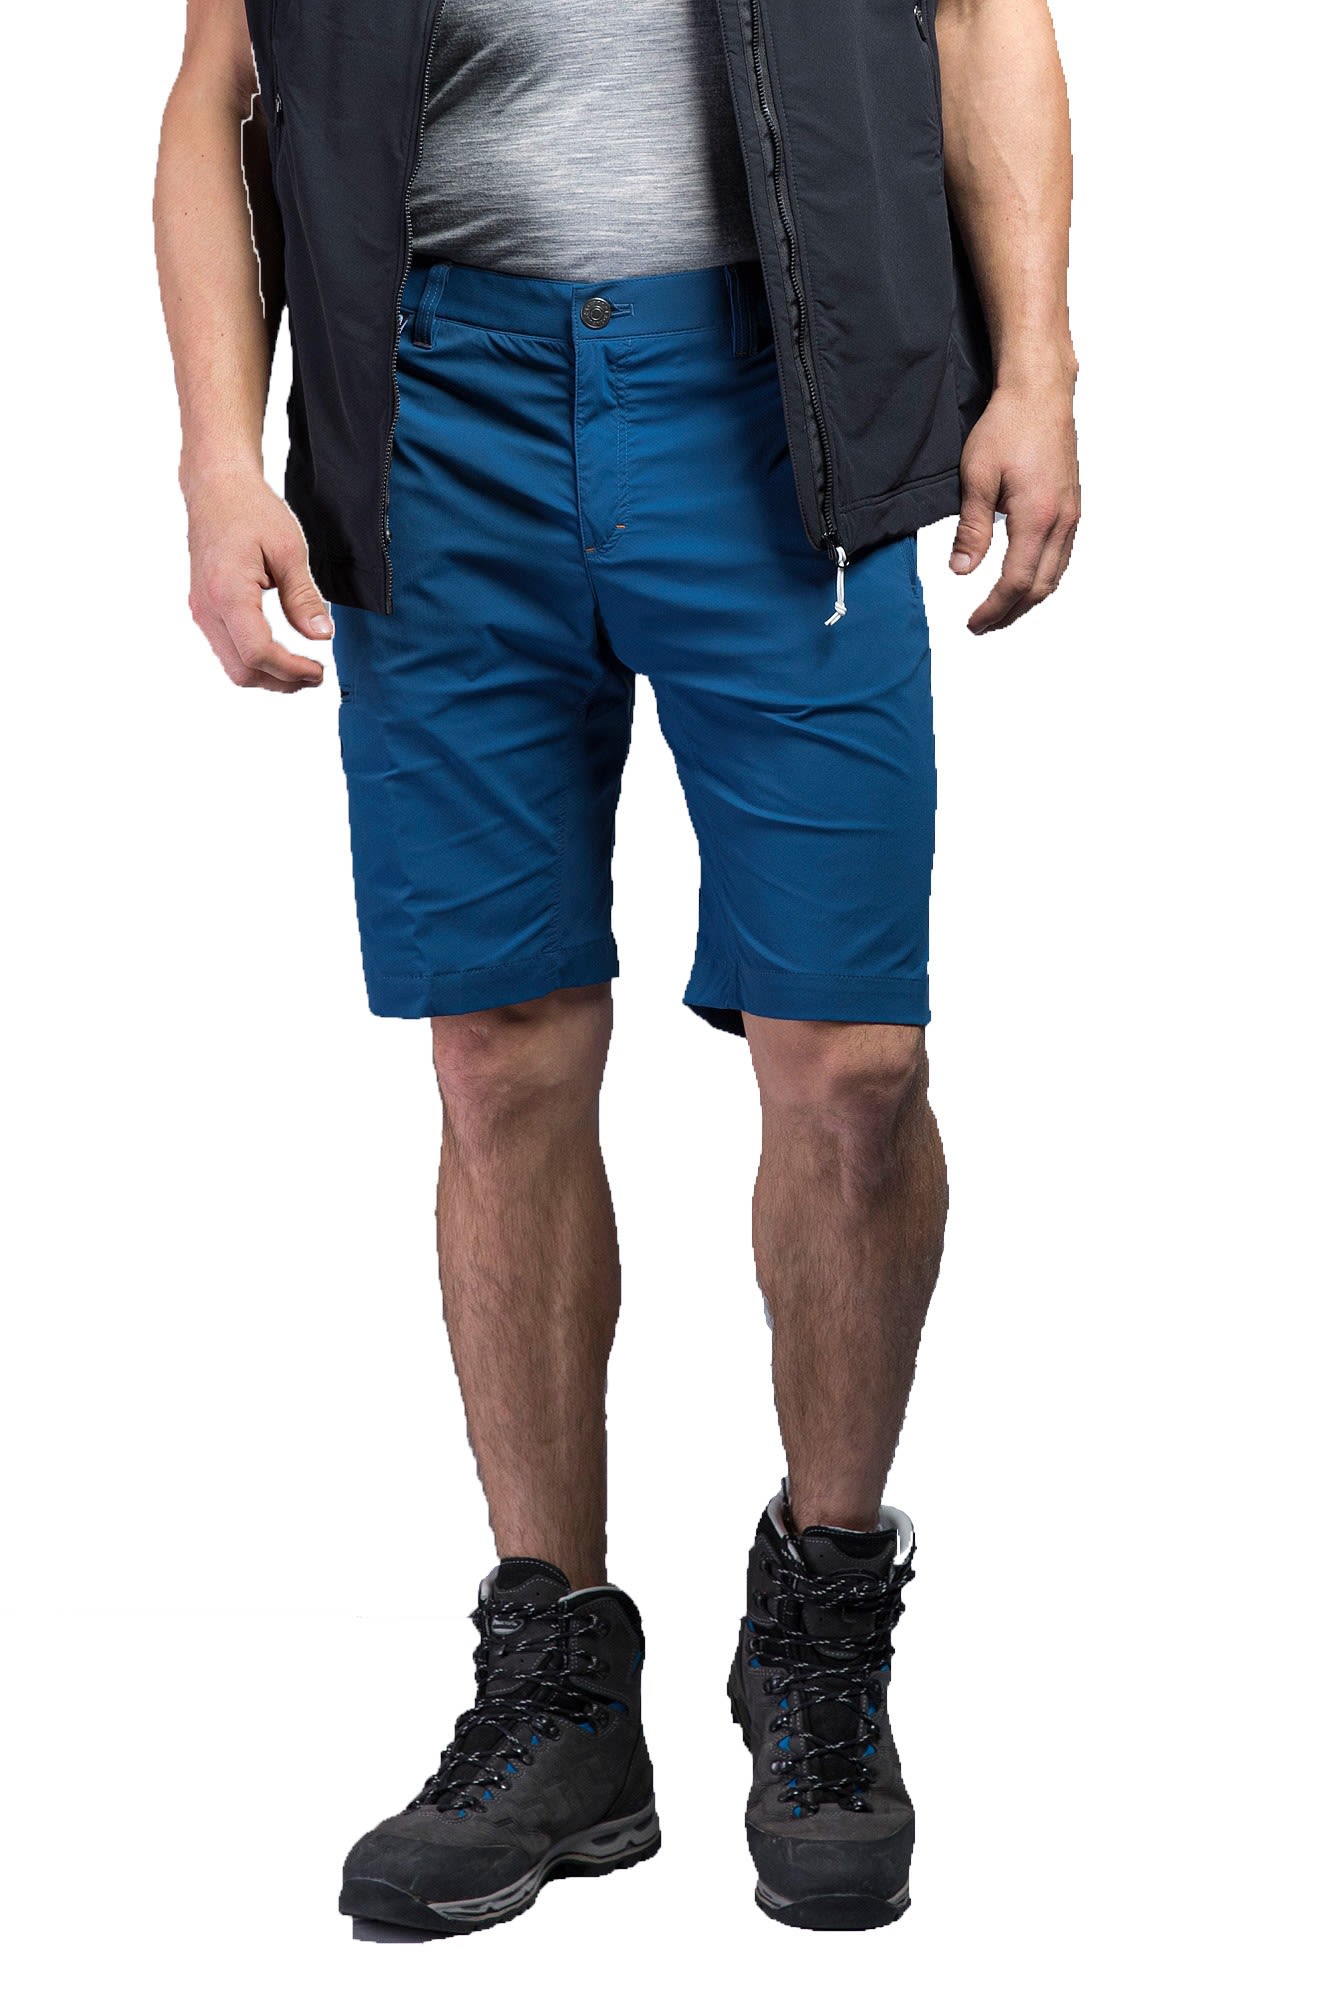 Tatonka Travel Shorts Blau- Male Shorts- Grsse 52 - Farbe Nautical Blue